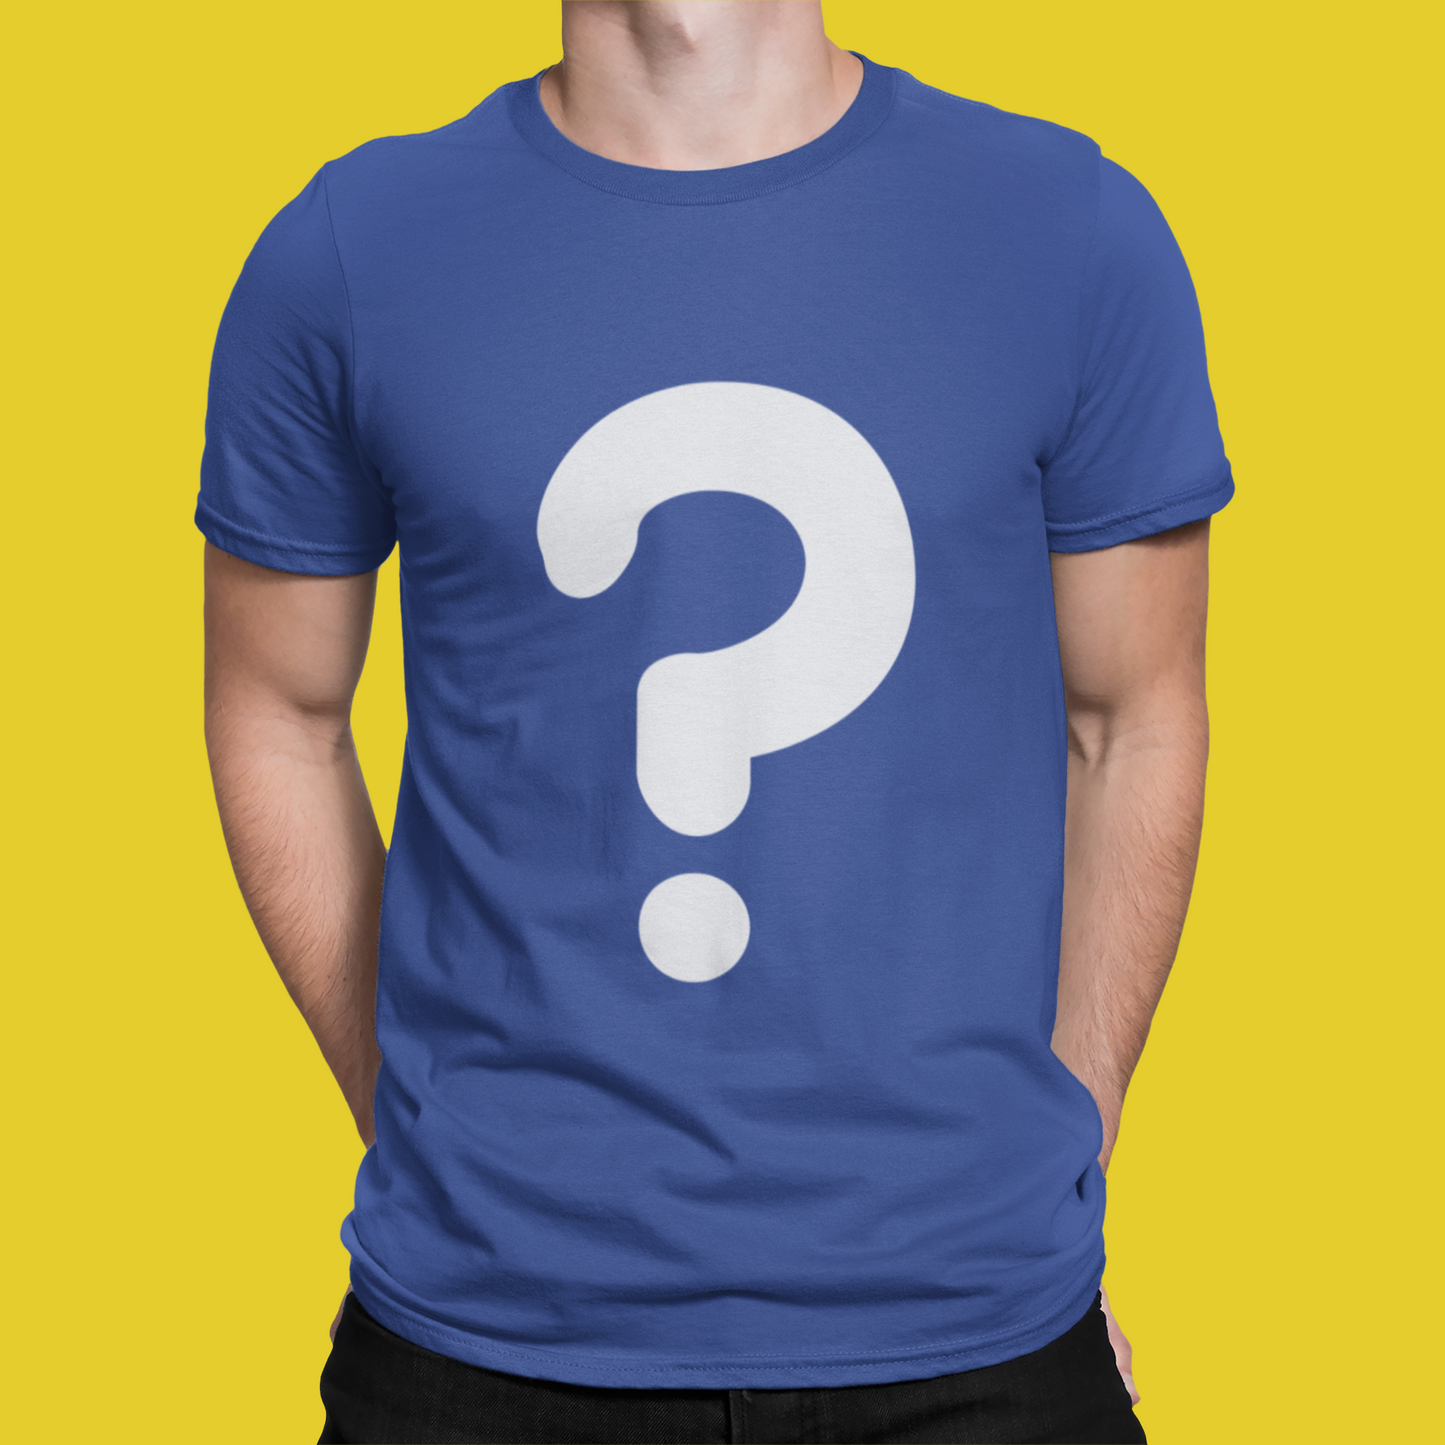 The Question Mark Mystery Tshirt